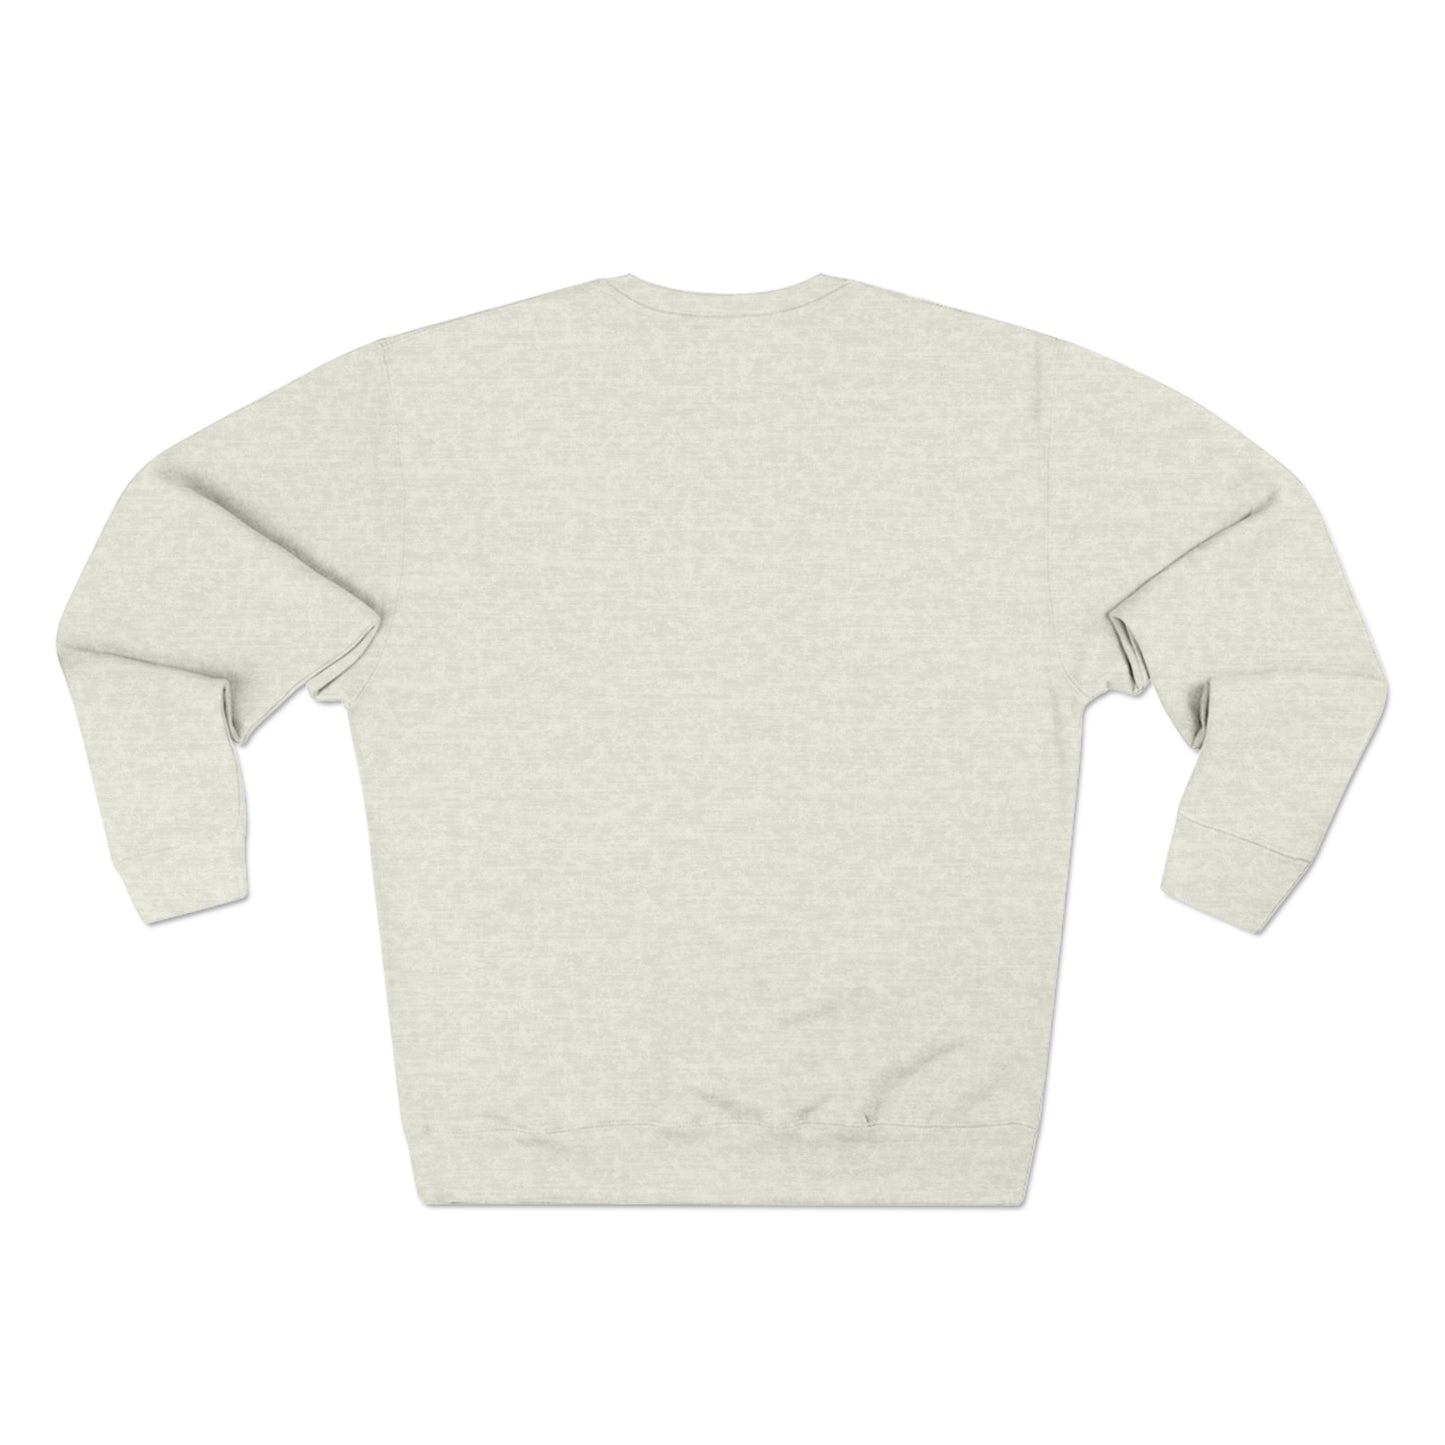 GoJoe Collection Unisex Crewneck Sweatshirt